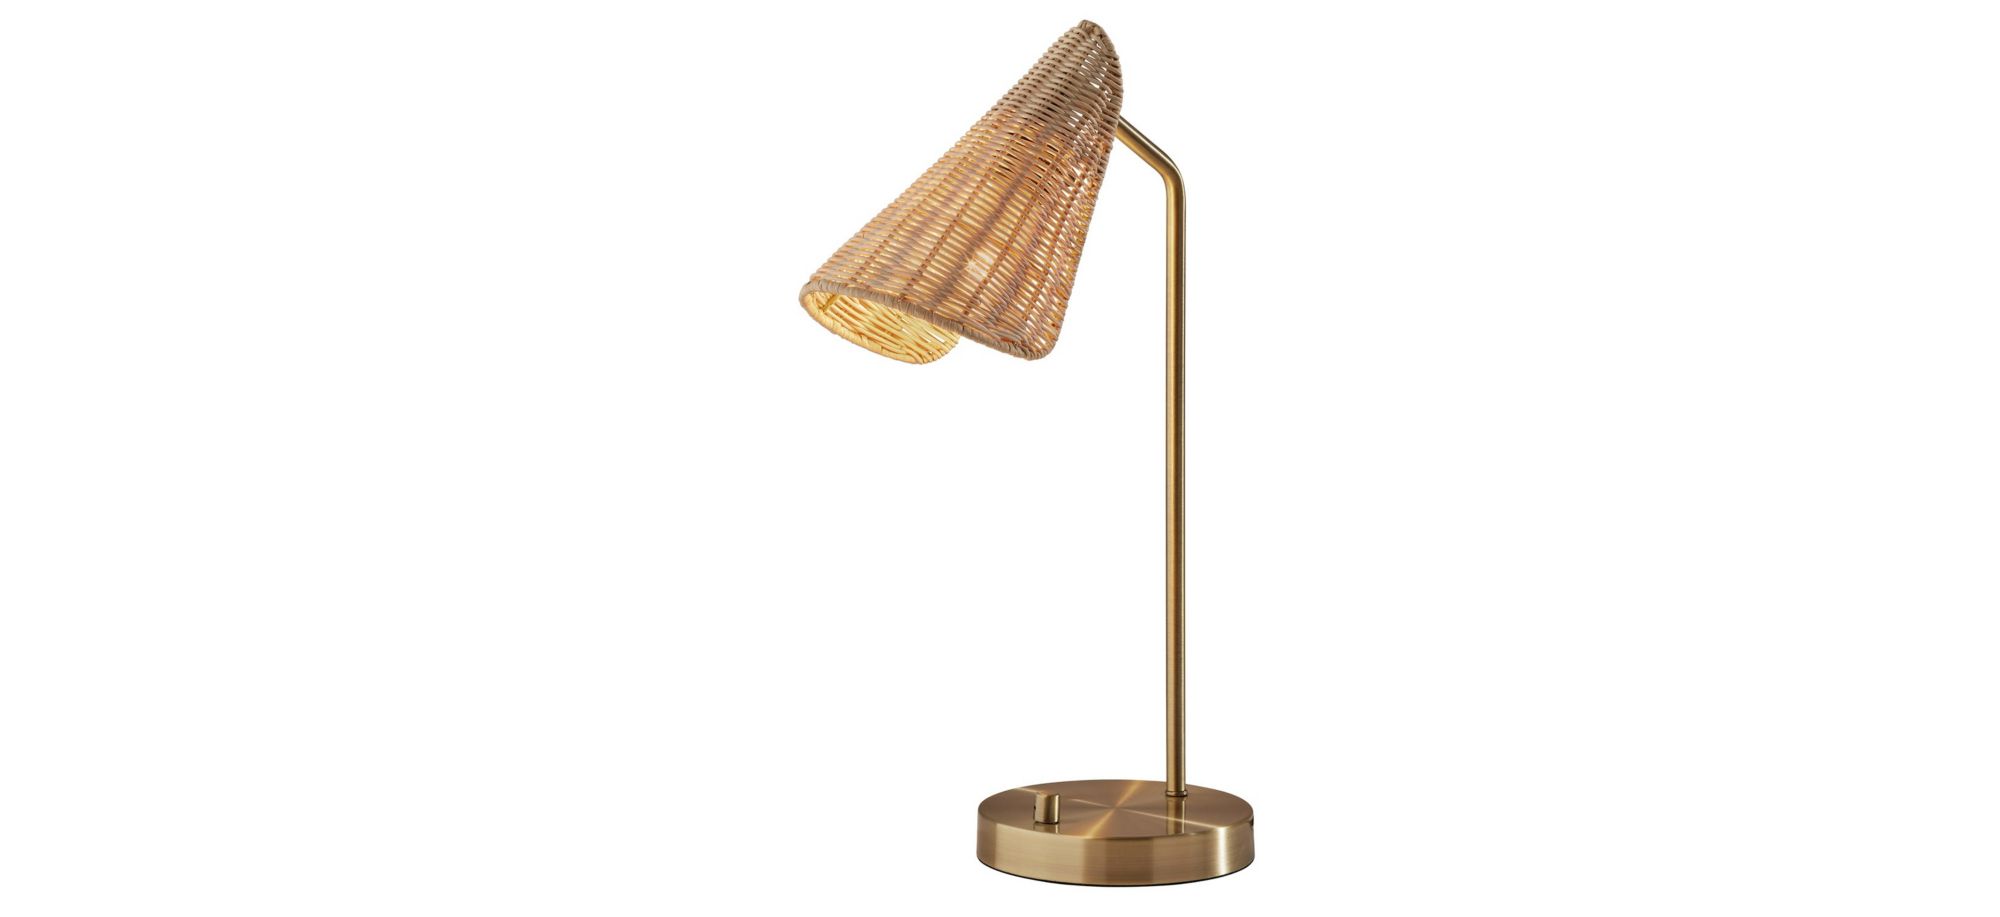 Cove Desk Lamp in Antique Brass by Adesso Inc